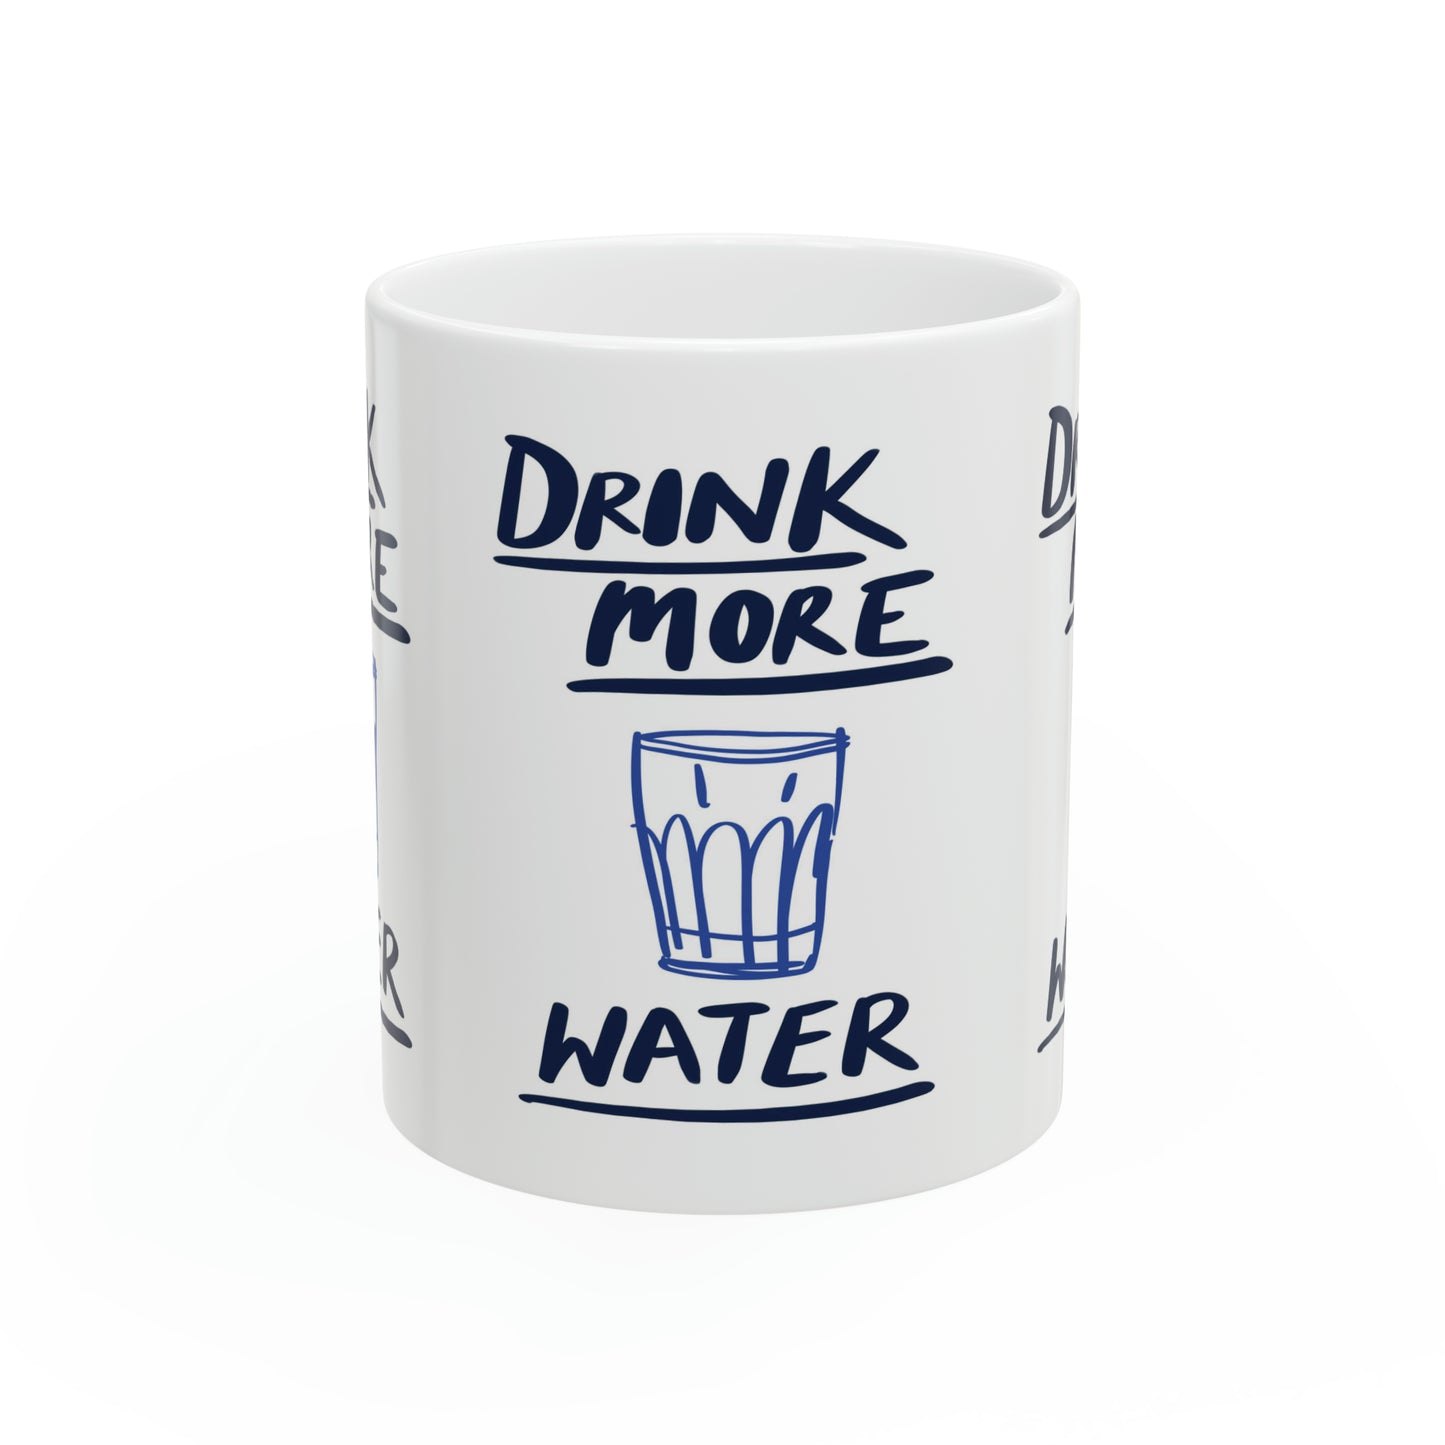 'Drink more water' Ceramic Mug, 11oz